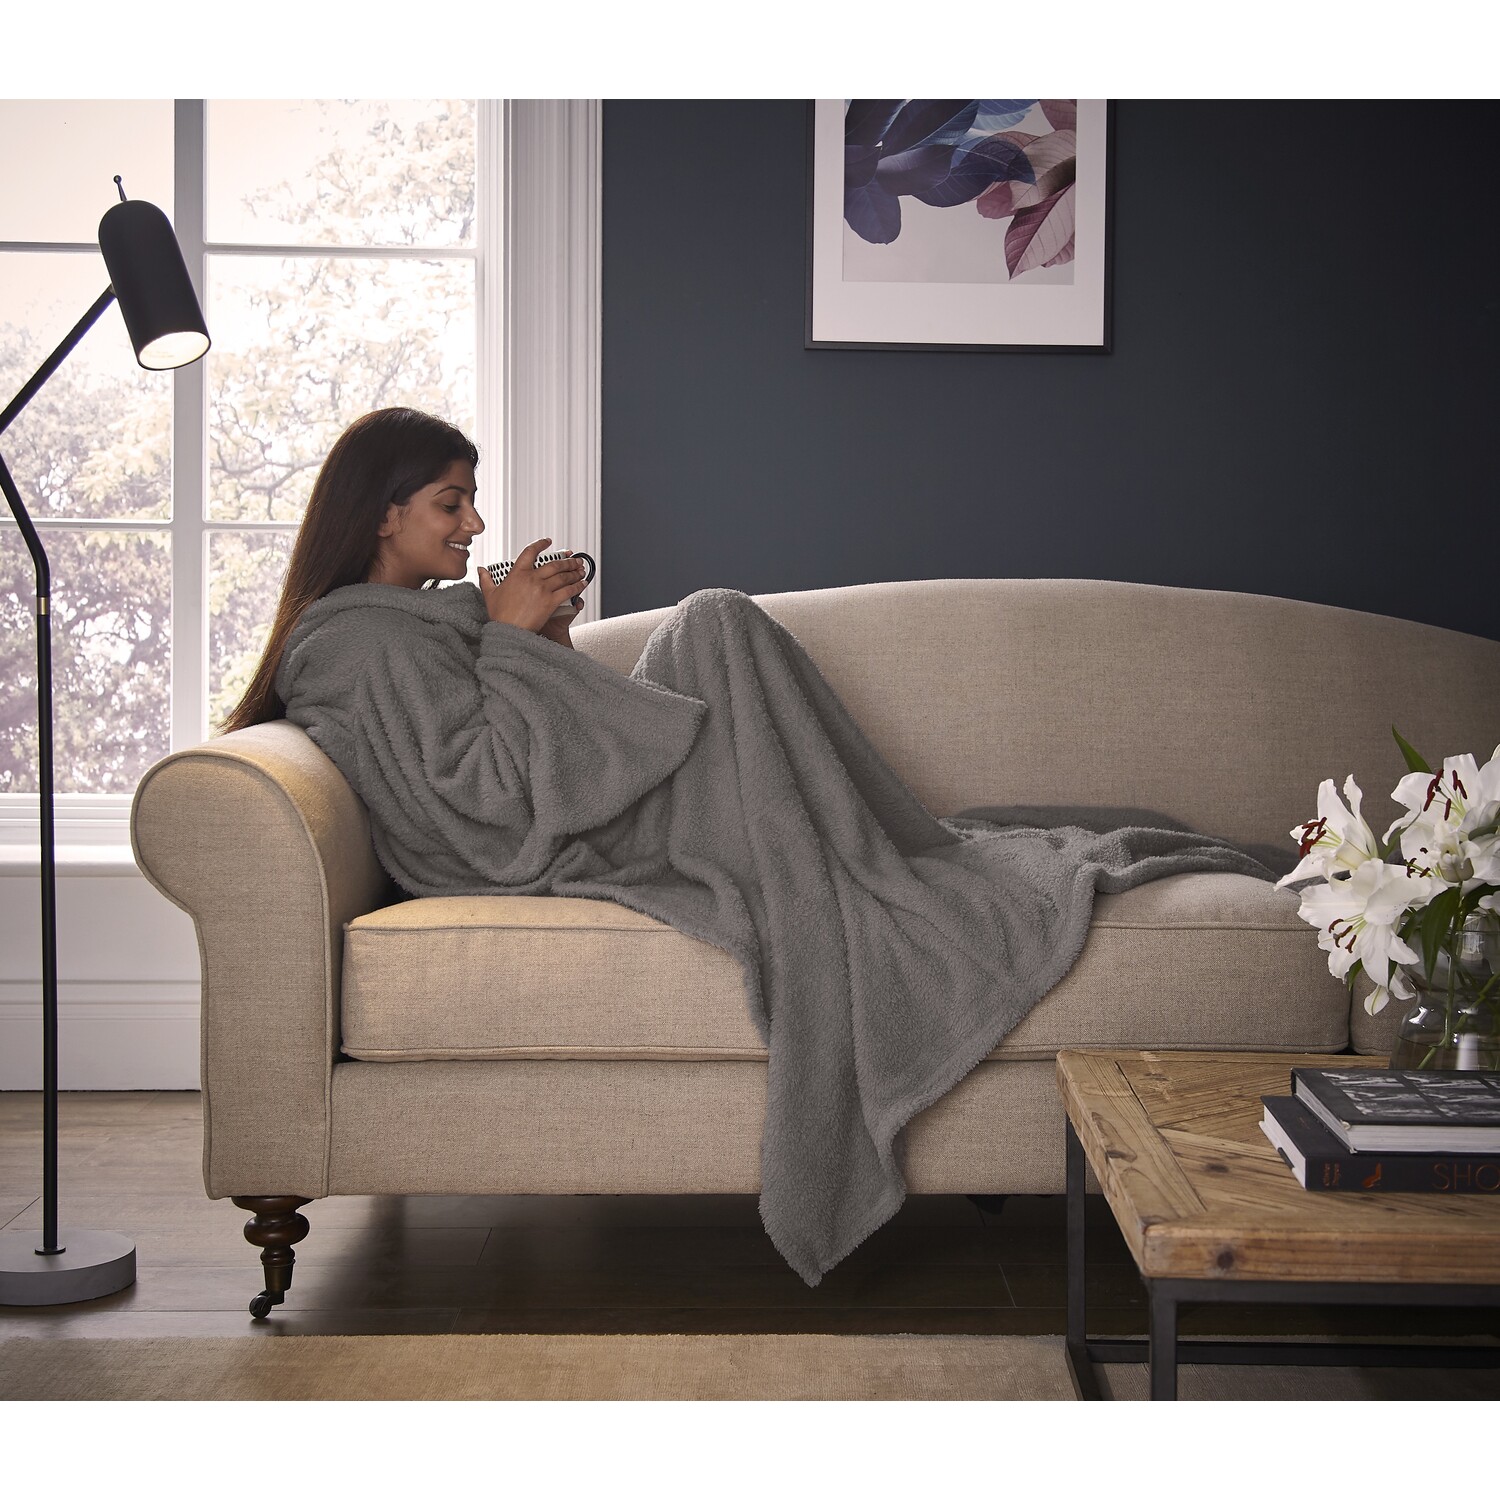 Silentnight Snugsie Sleeved Blanket  - Charcoal Image 2